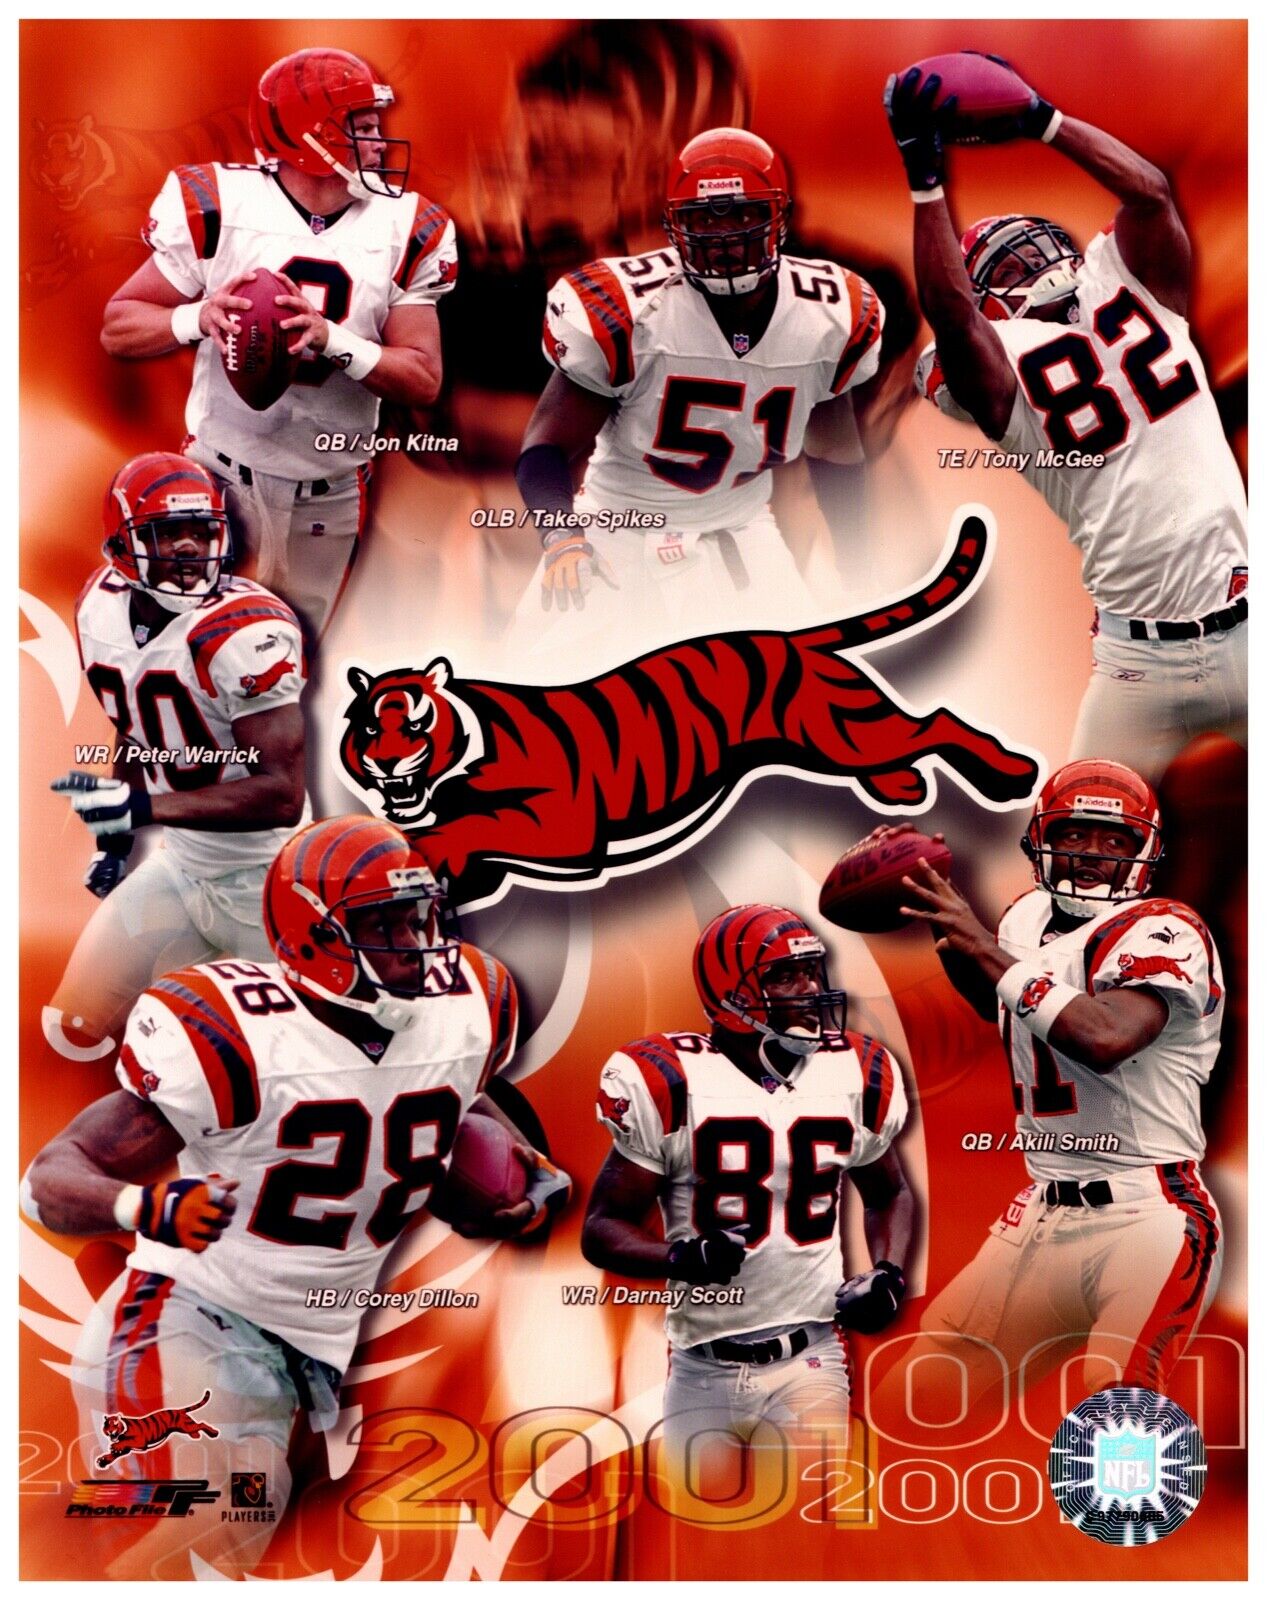 2001 Cincinnati Bengals Team Composite Unsigned Photo File 8x10 Hologram Photo